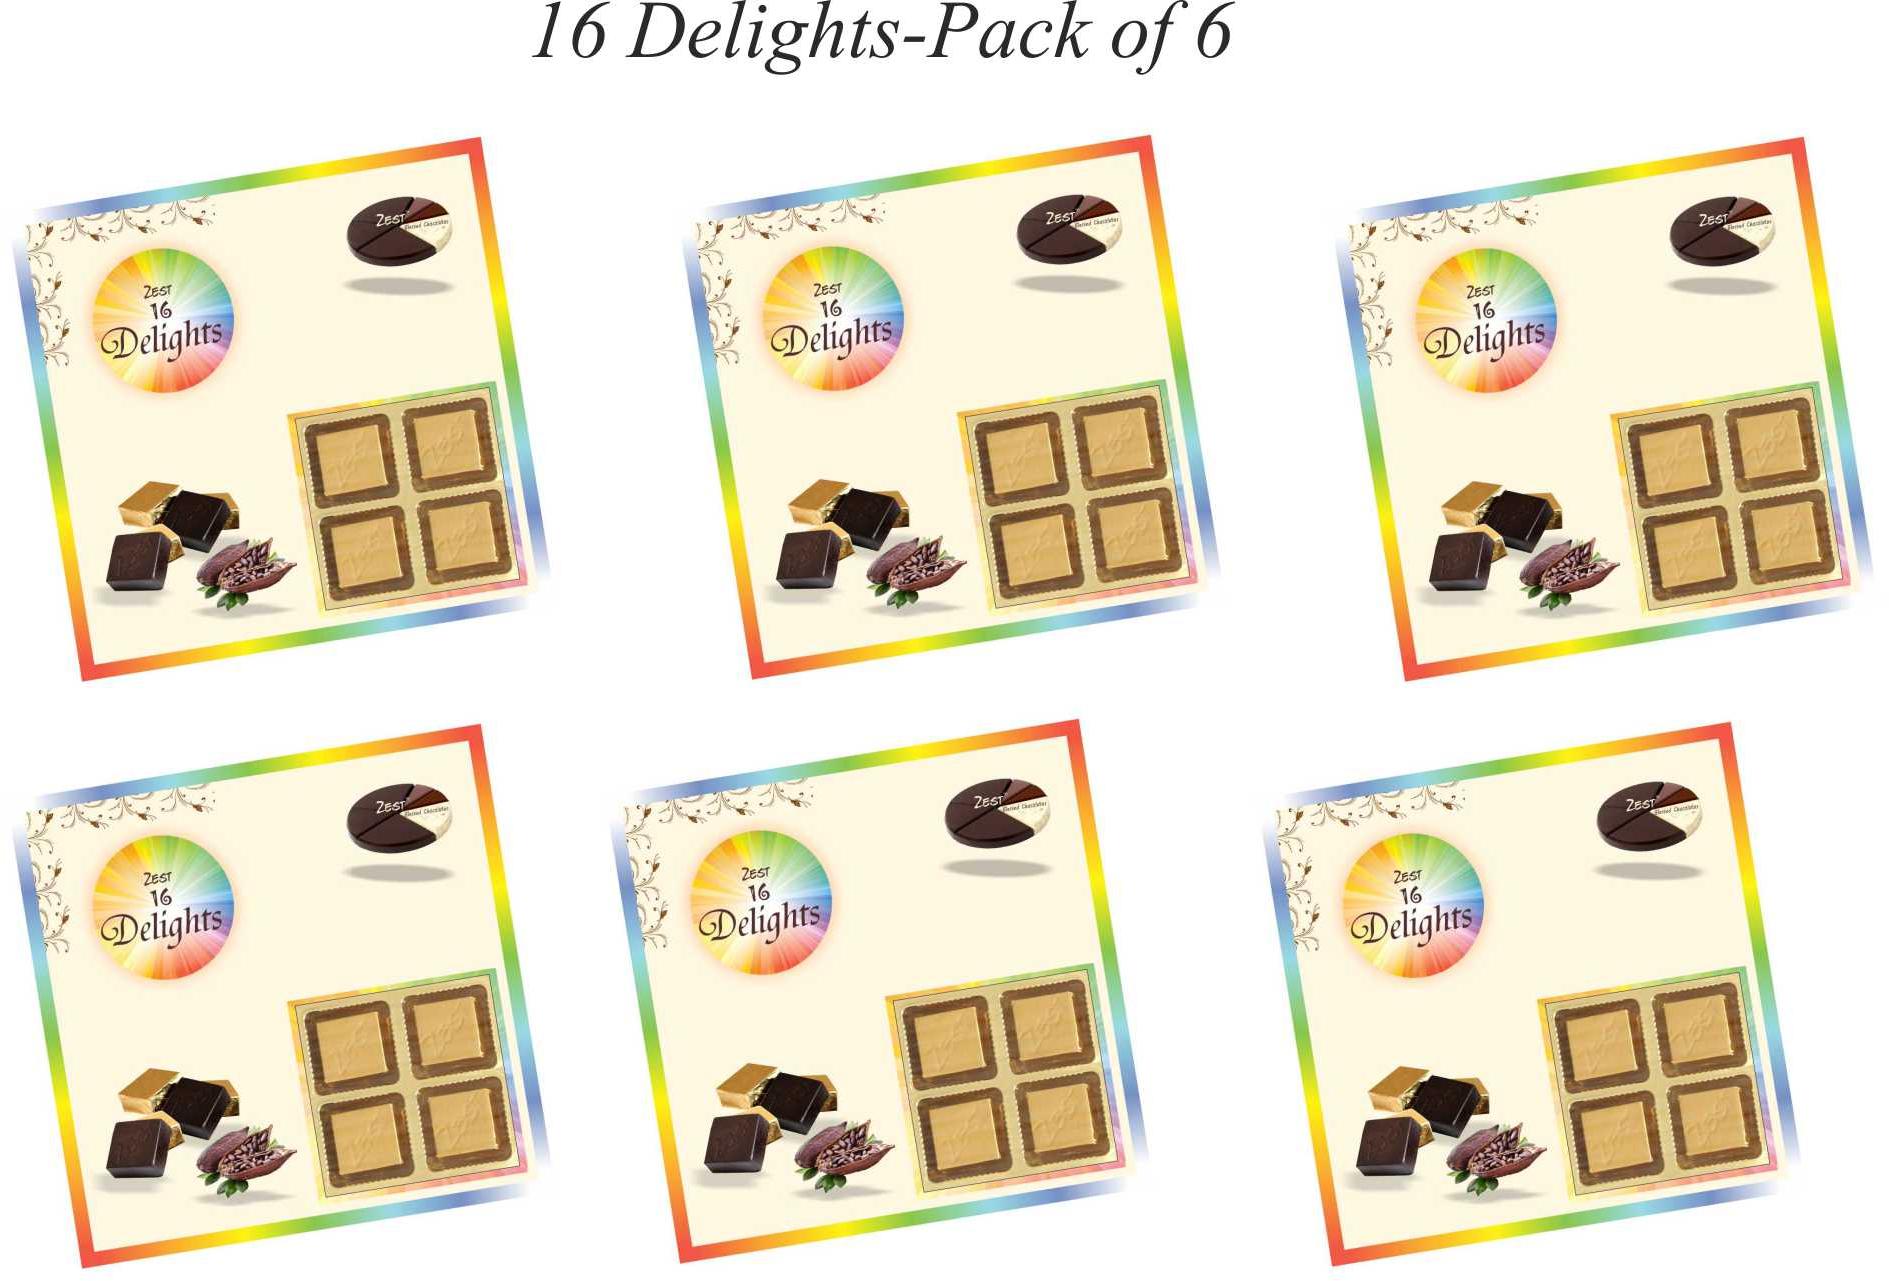 16 Delight Chocolate Box